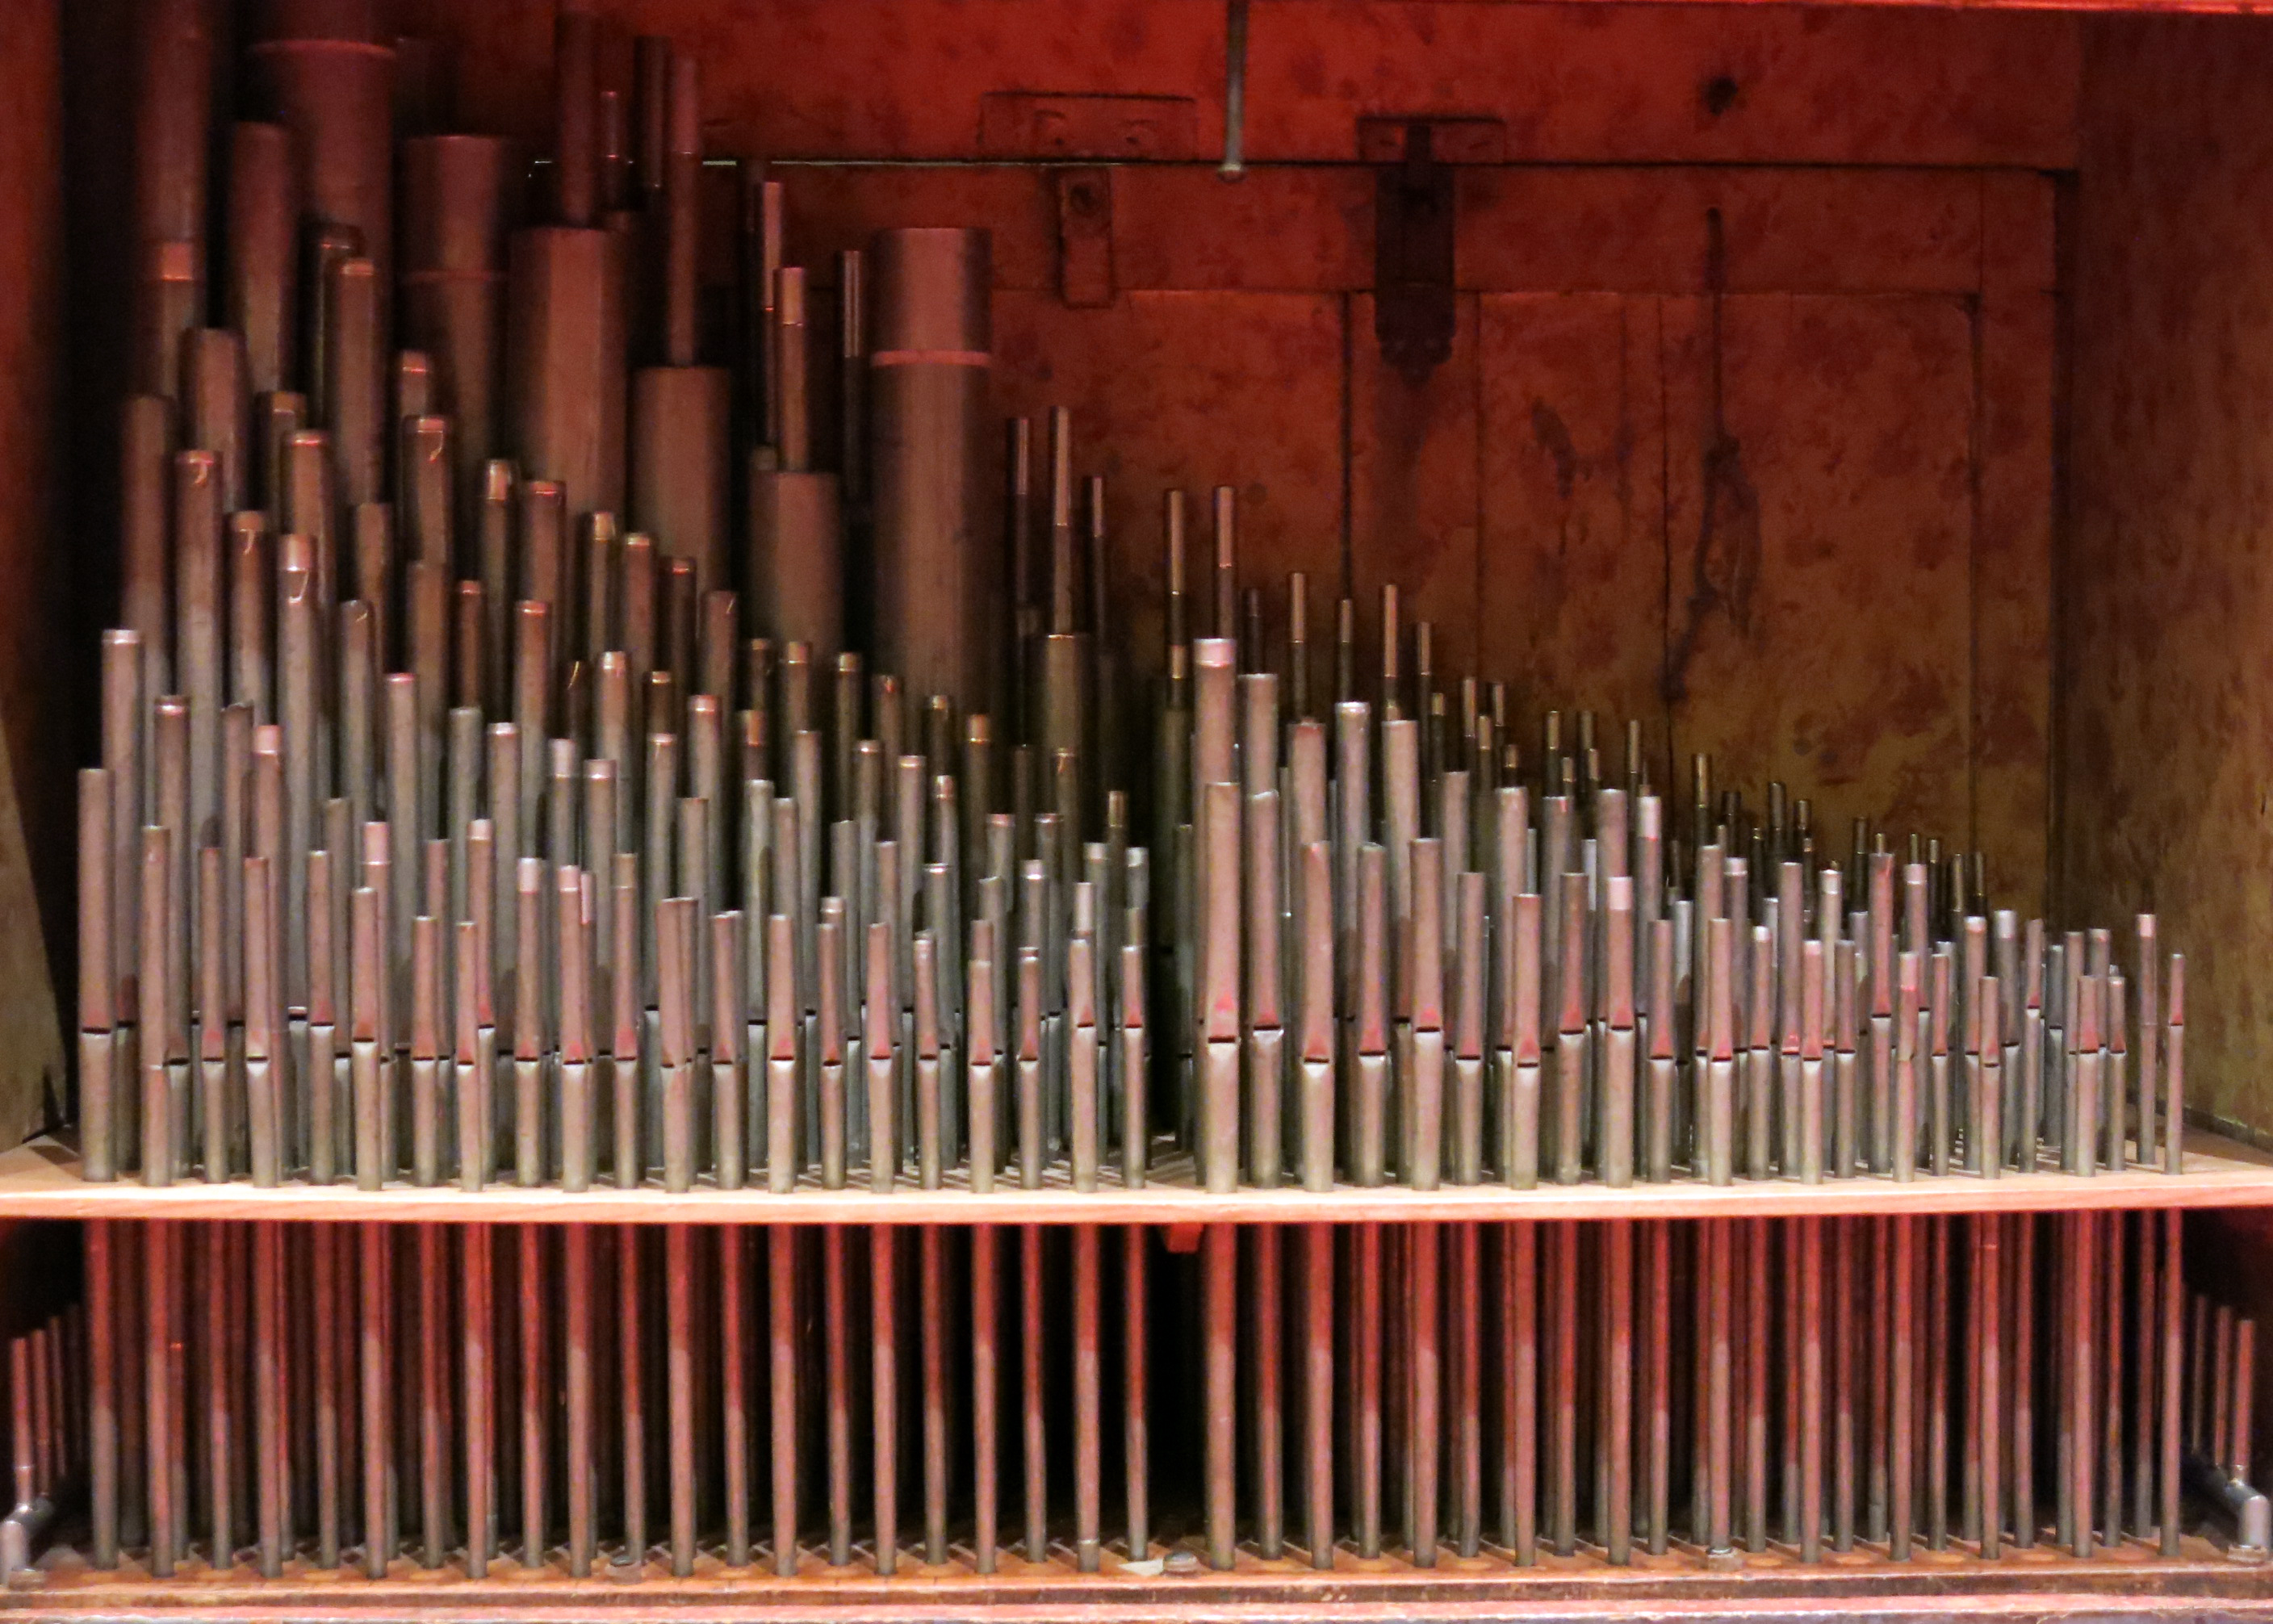 <i>Detalle de tubos de órgano, (s. XVII),</i> Museo de la Música de Barcelona, fotografía: Enric Fontvila, 2013, licencia Creative Commons